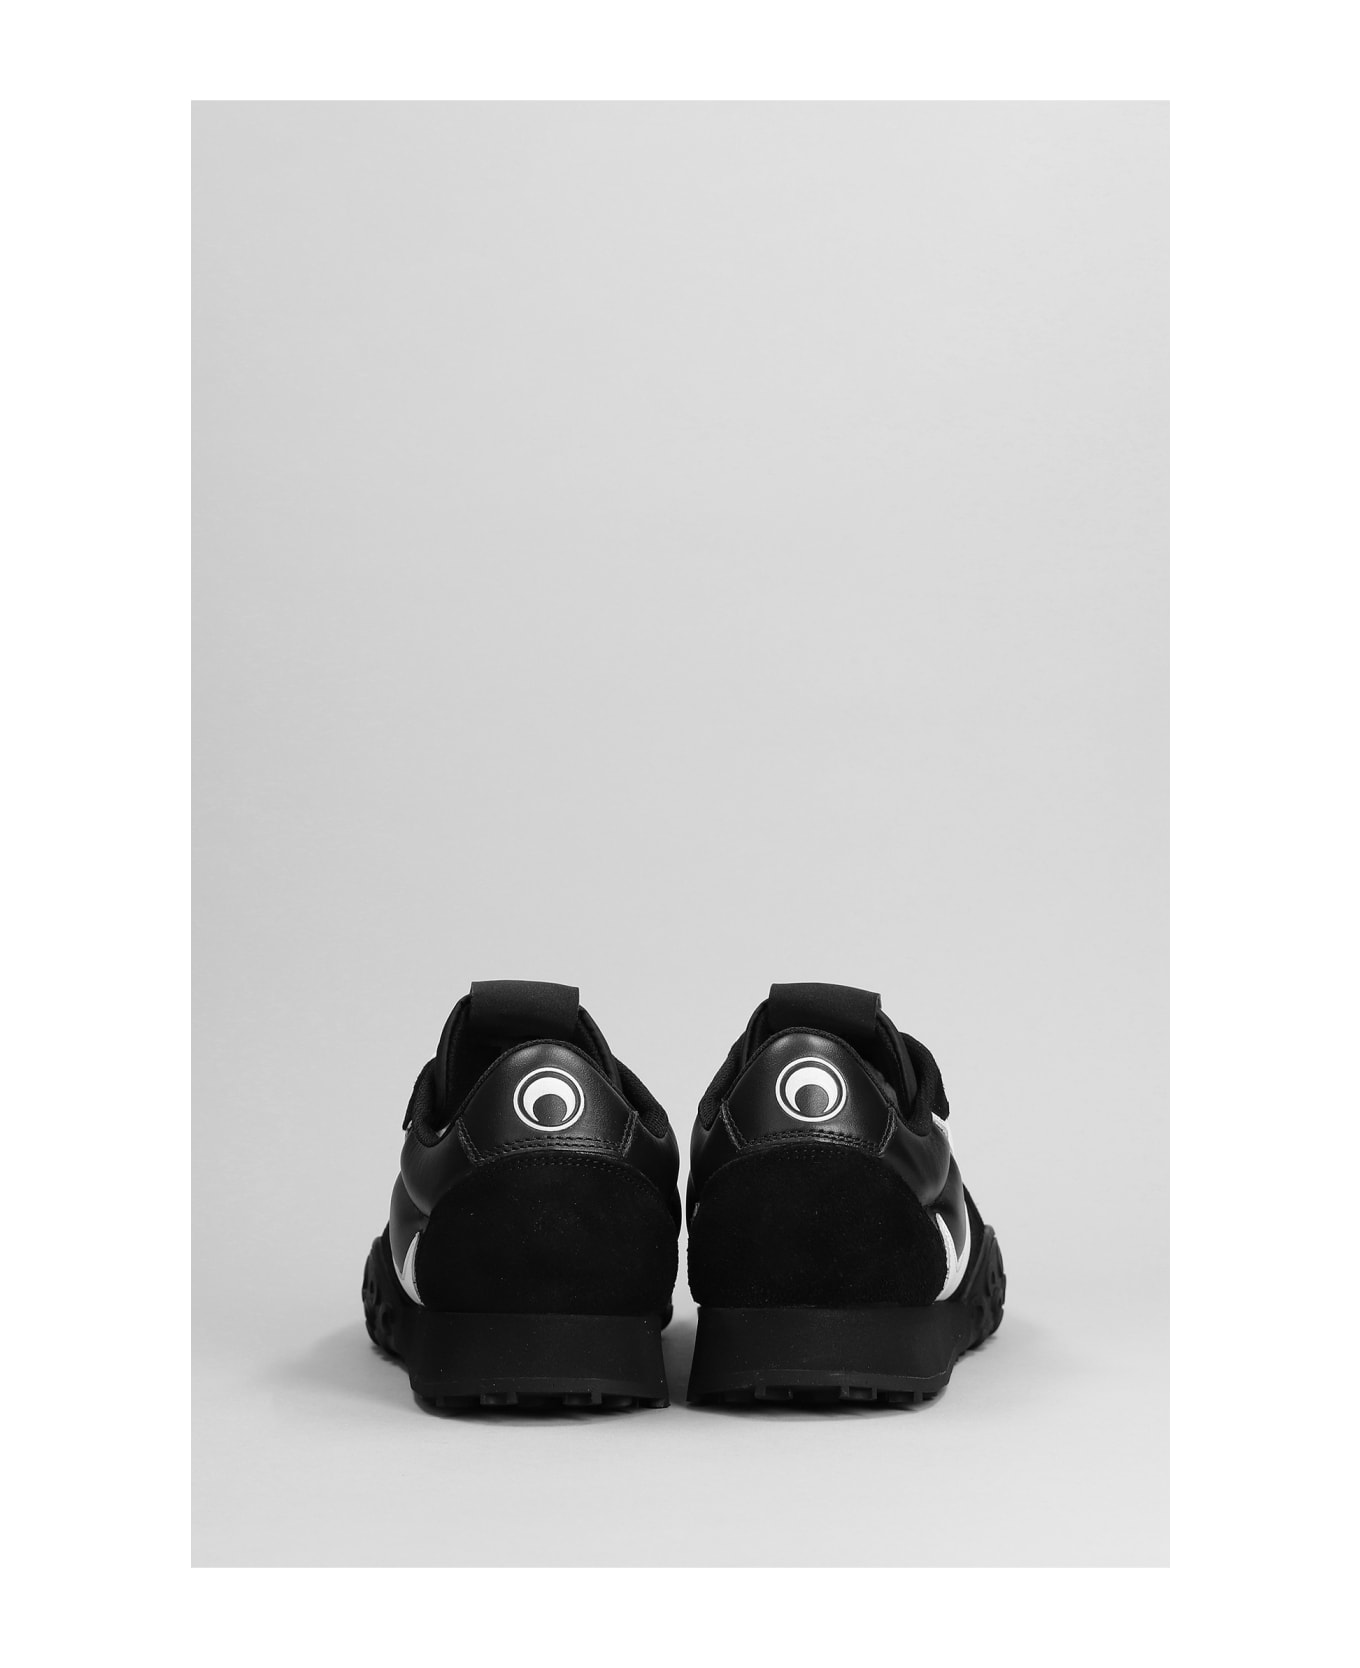 Marine Serre Ms Rise 22 Sneakers In Black Leather - black